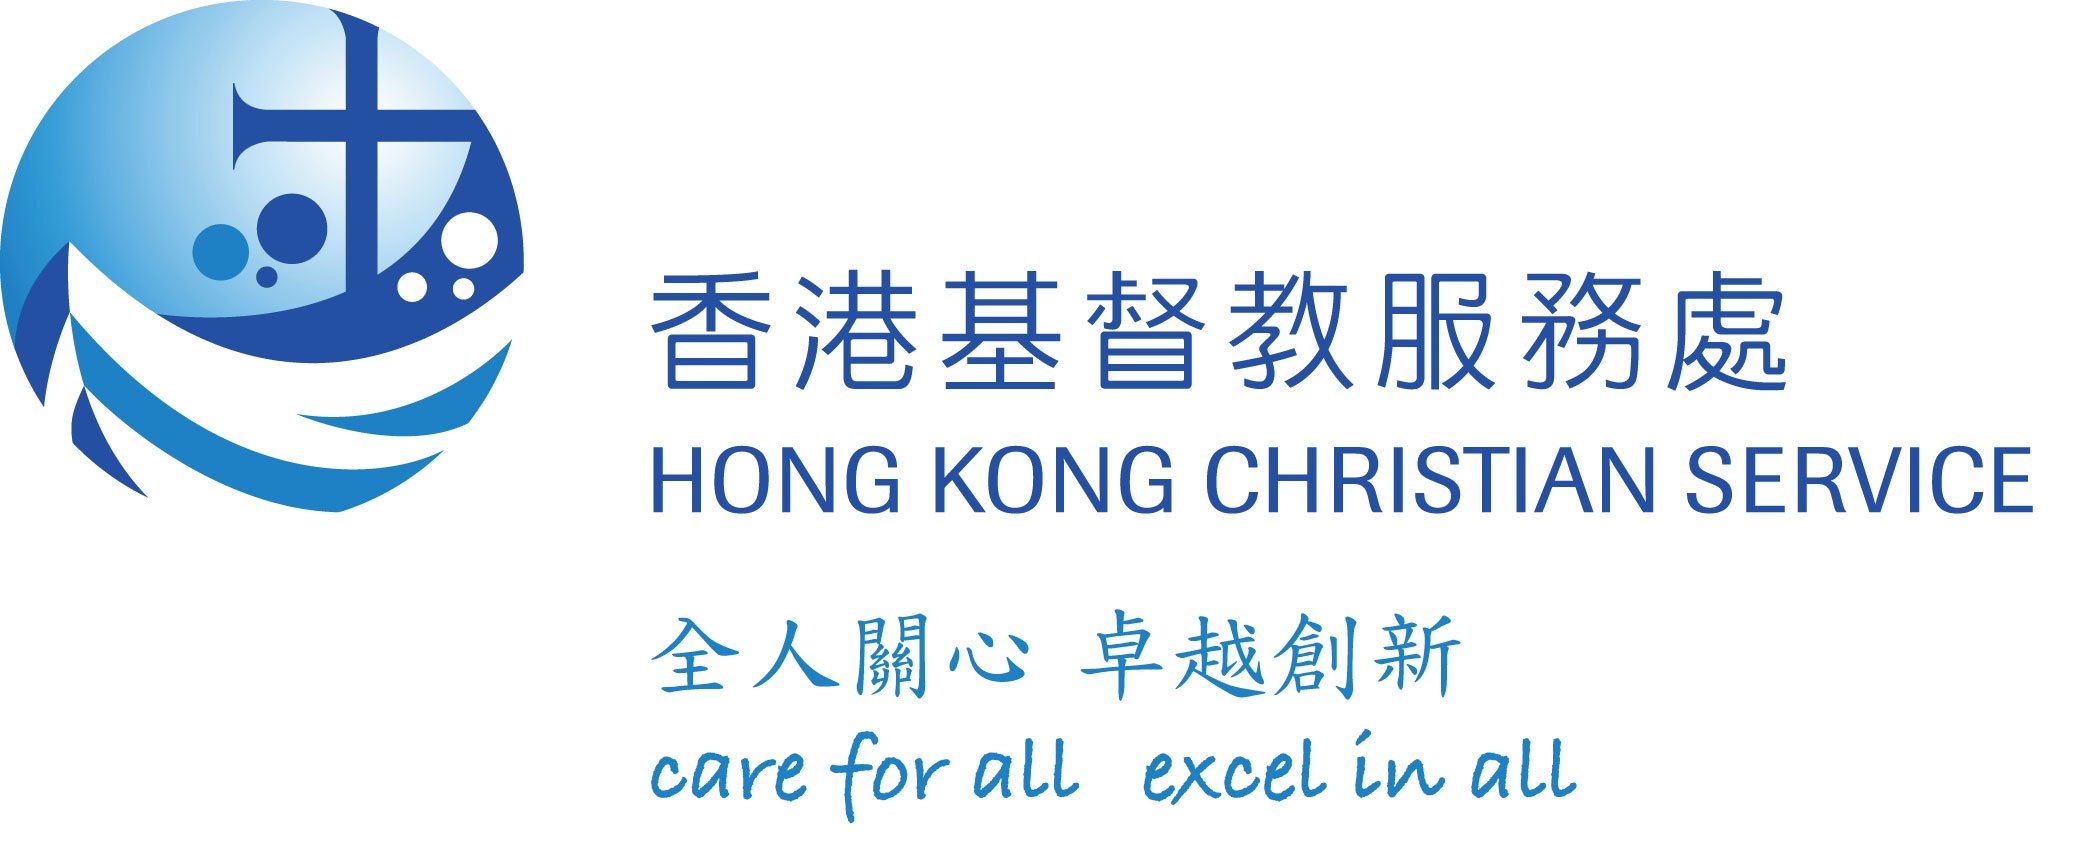 Hong Kong Christian Service 香港基督教服務處